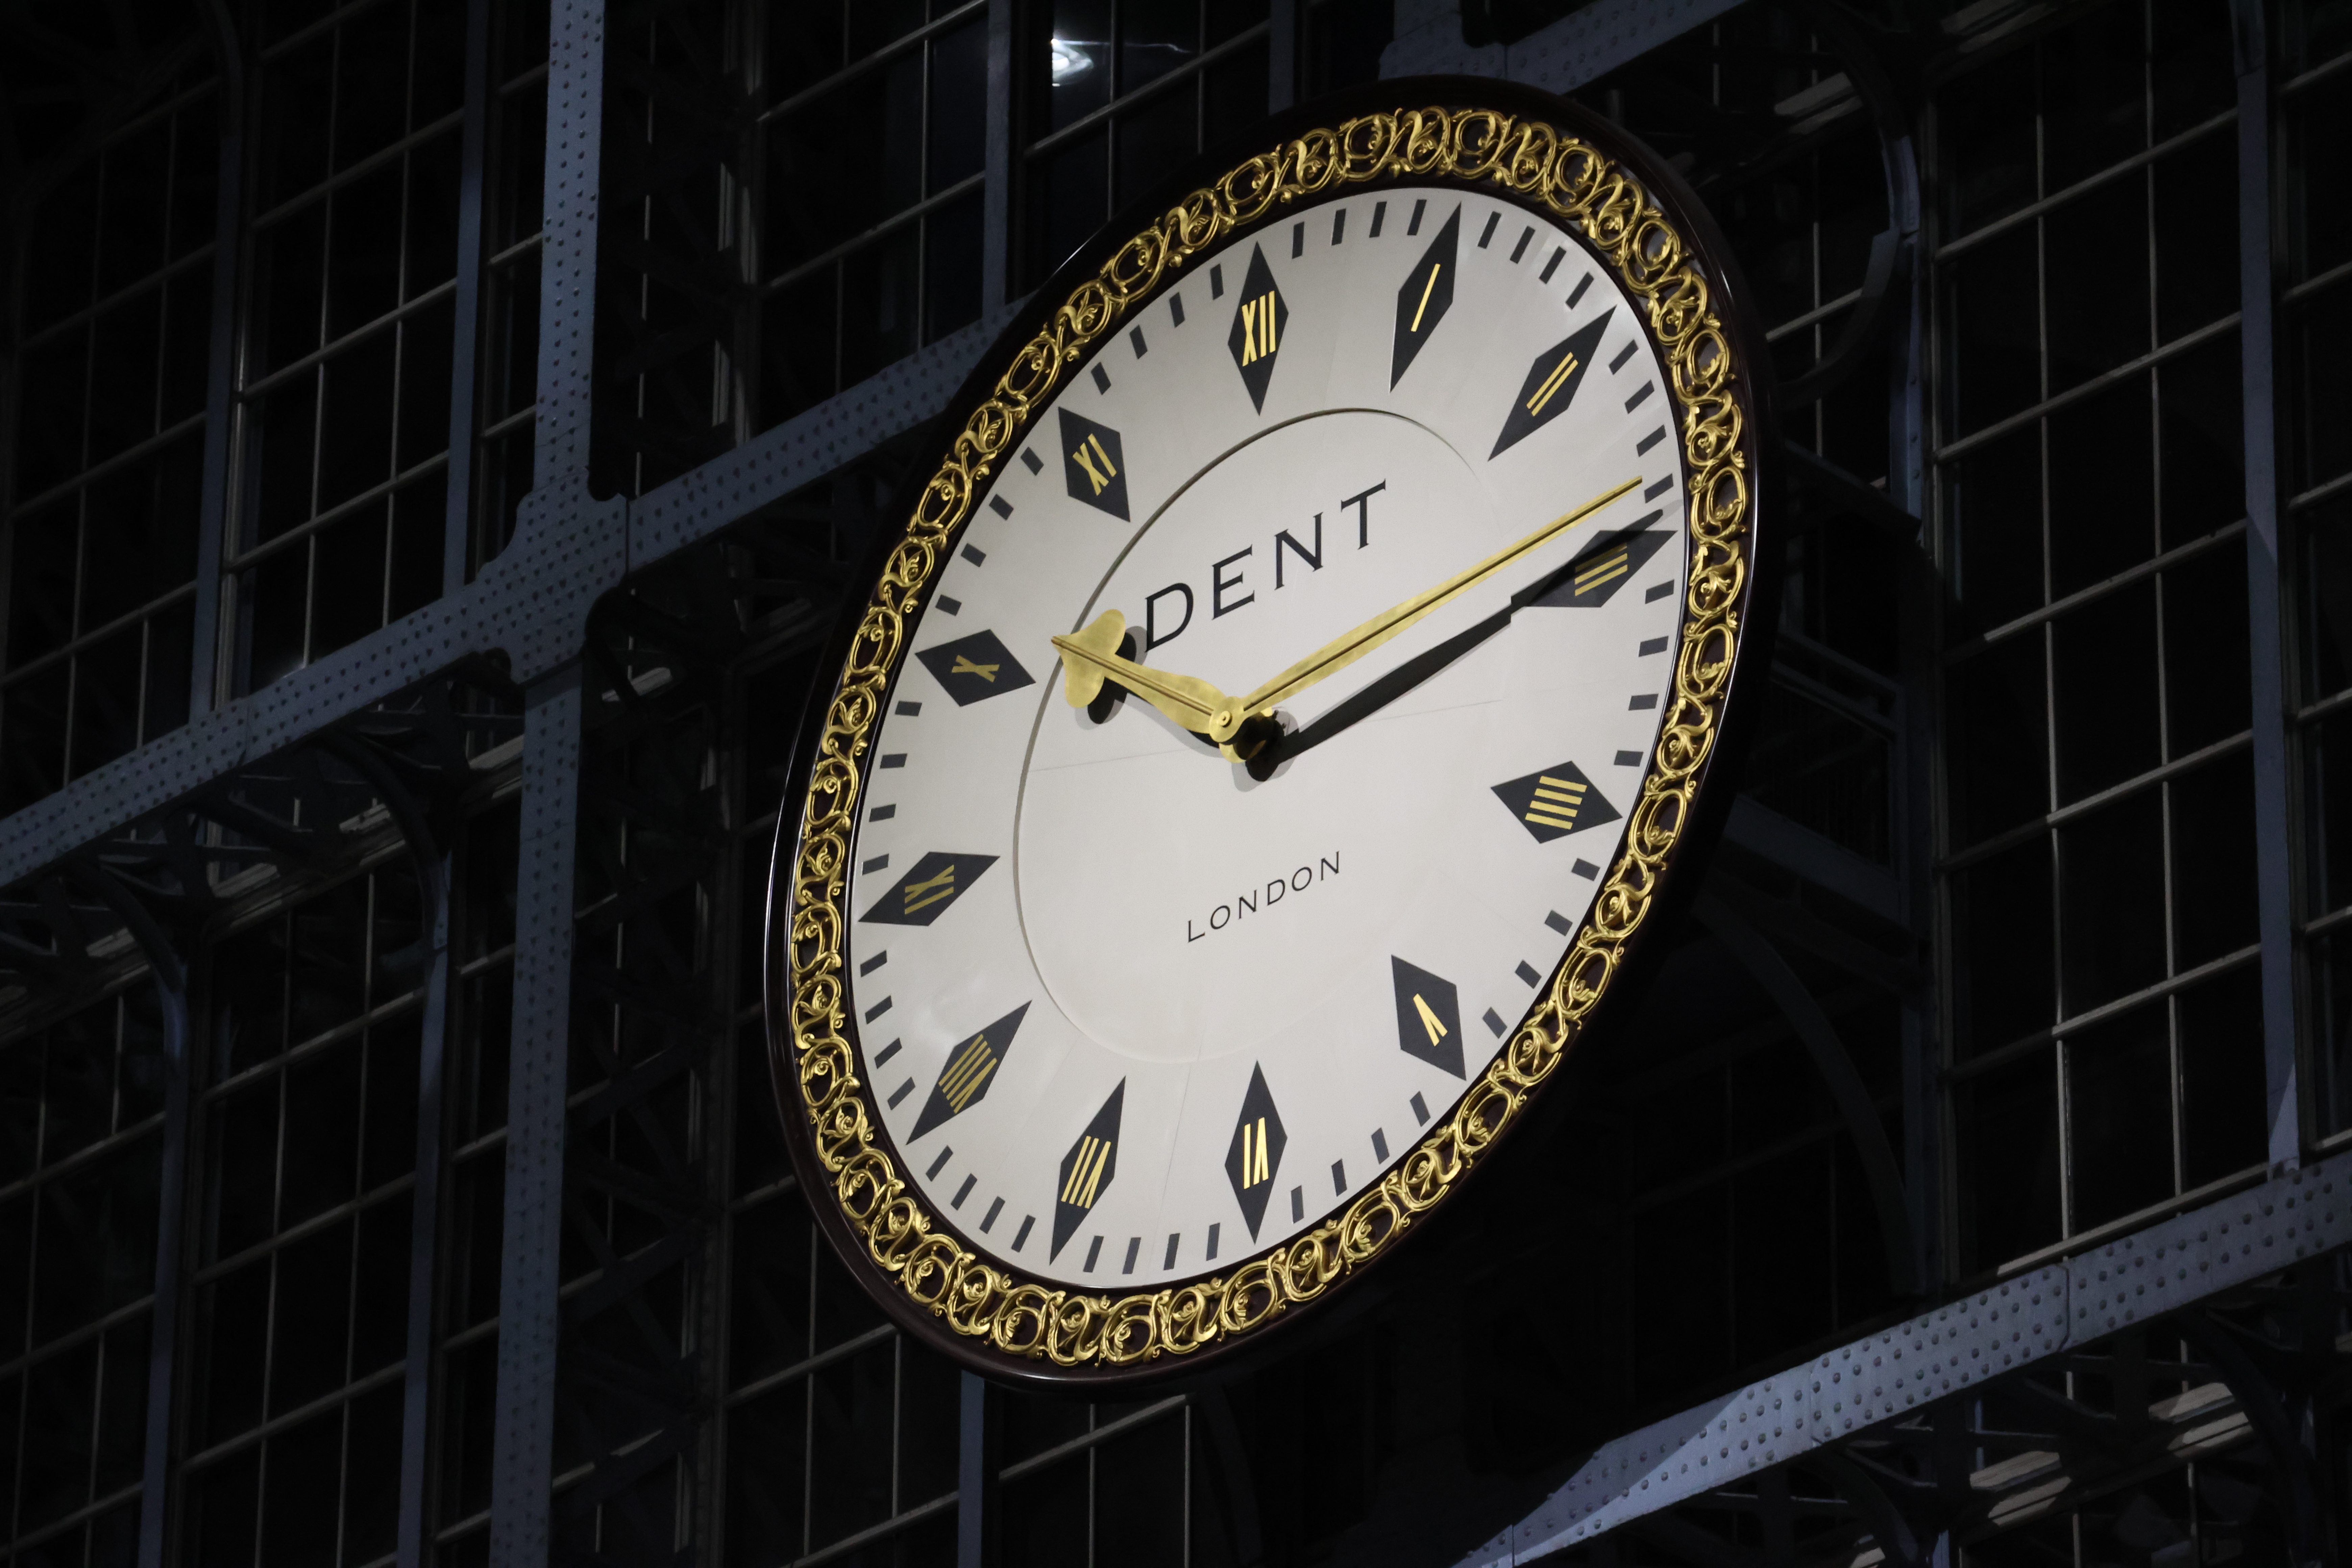 St Pancras Station Clock, 1/200s, f/6.3, ISO5000, 118mm, Handheld